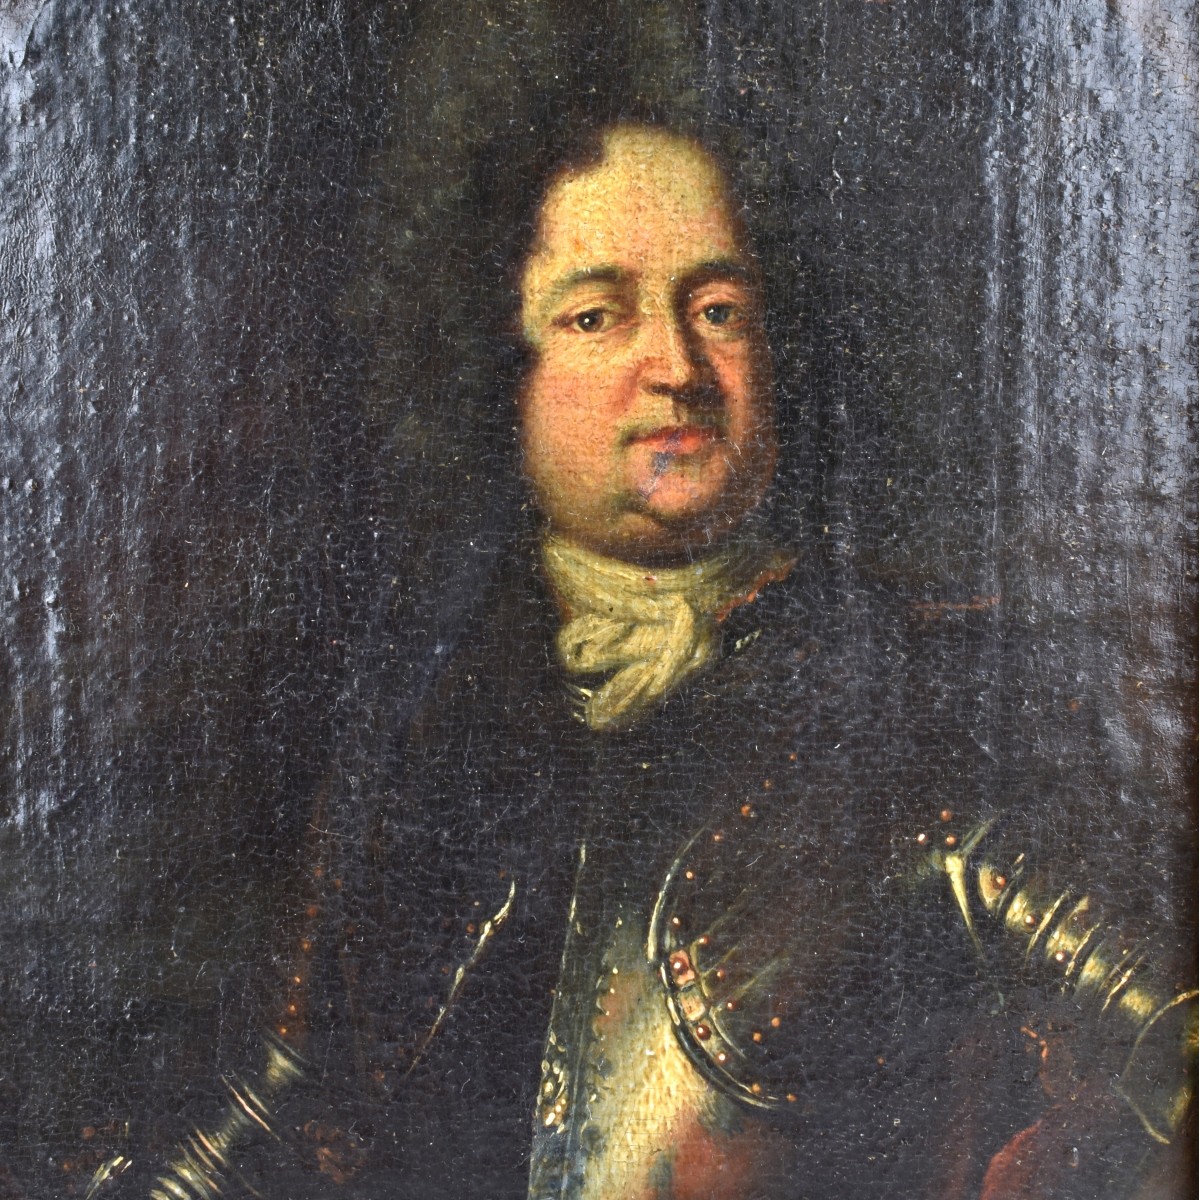 After: Nicolas de Largillière (1656-1746) O/B